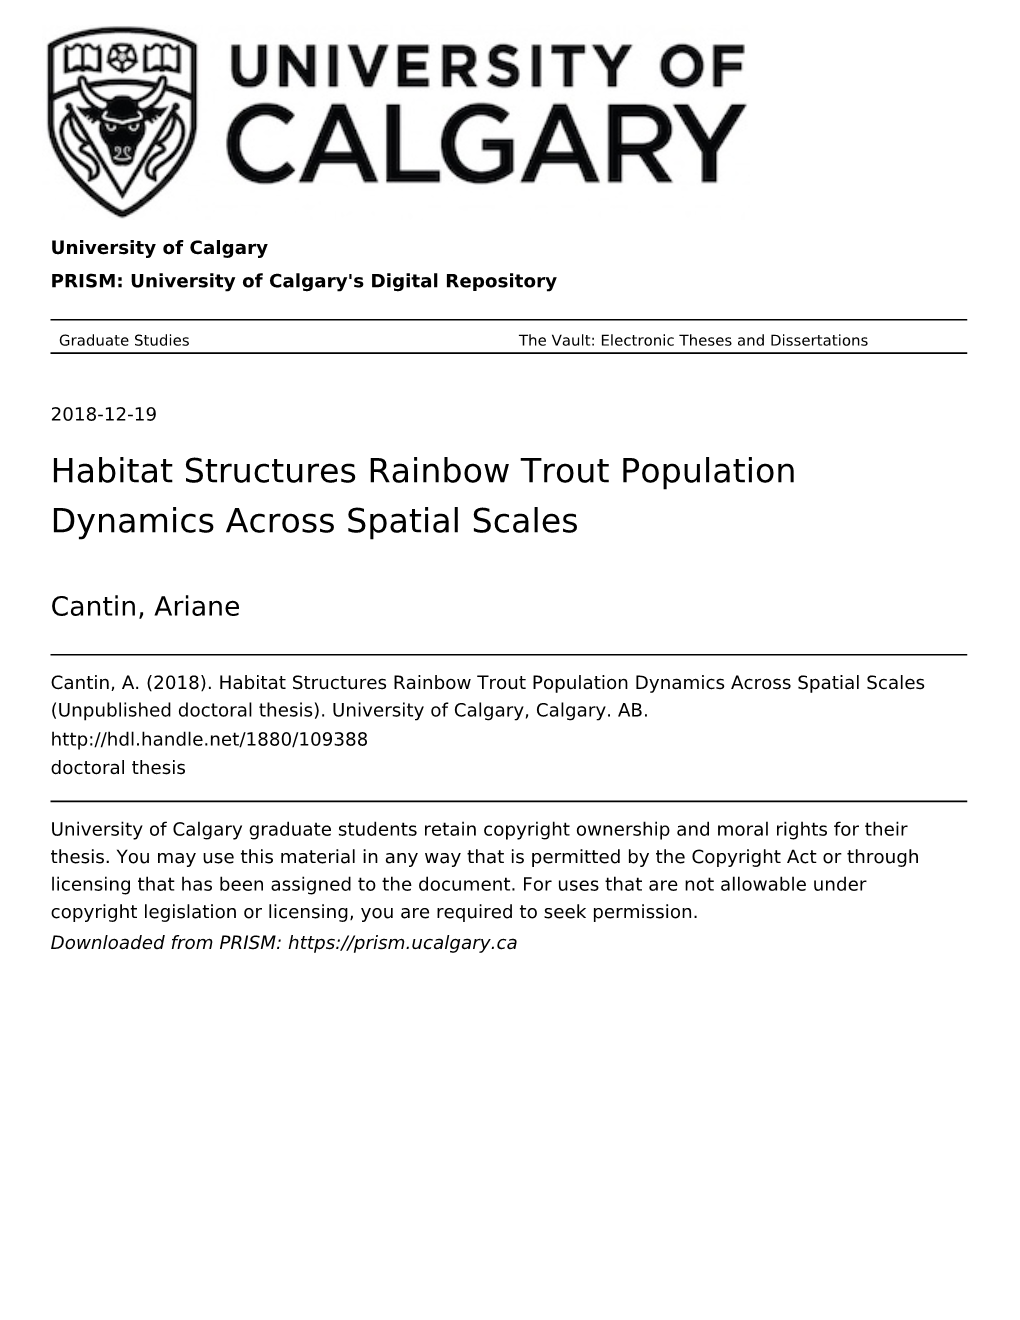 Habitat Structures Rainbow Trout Population Dynamics Across Spatial Scales